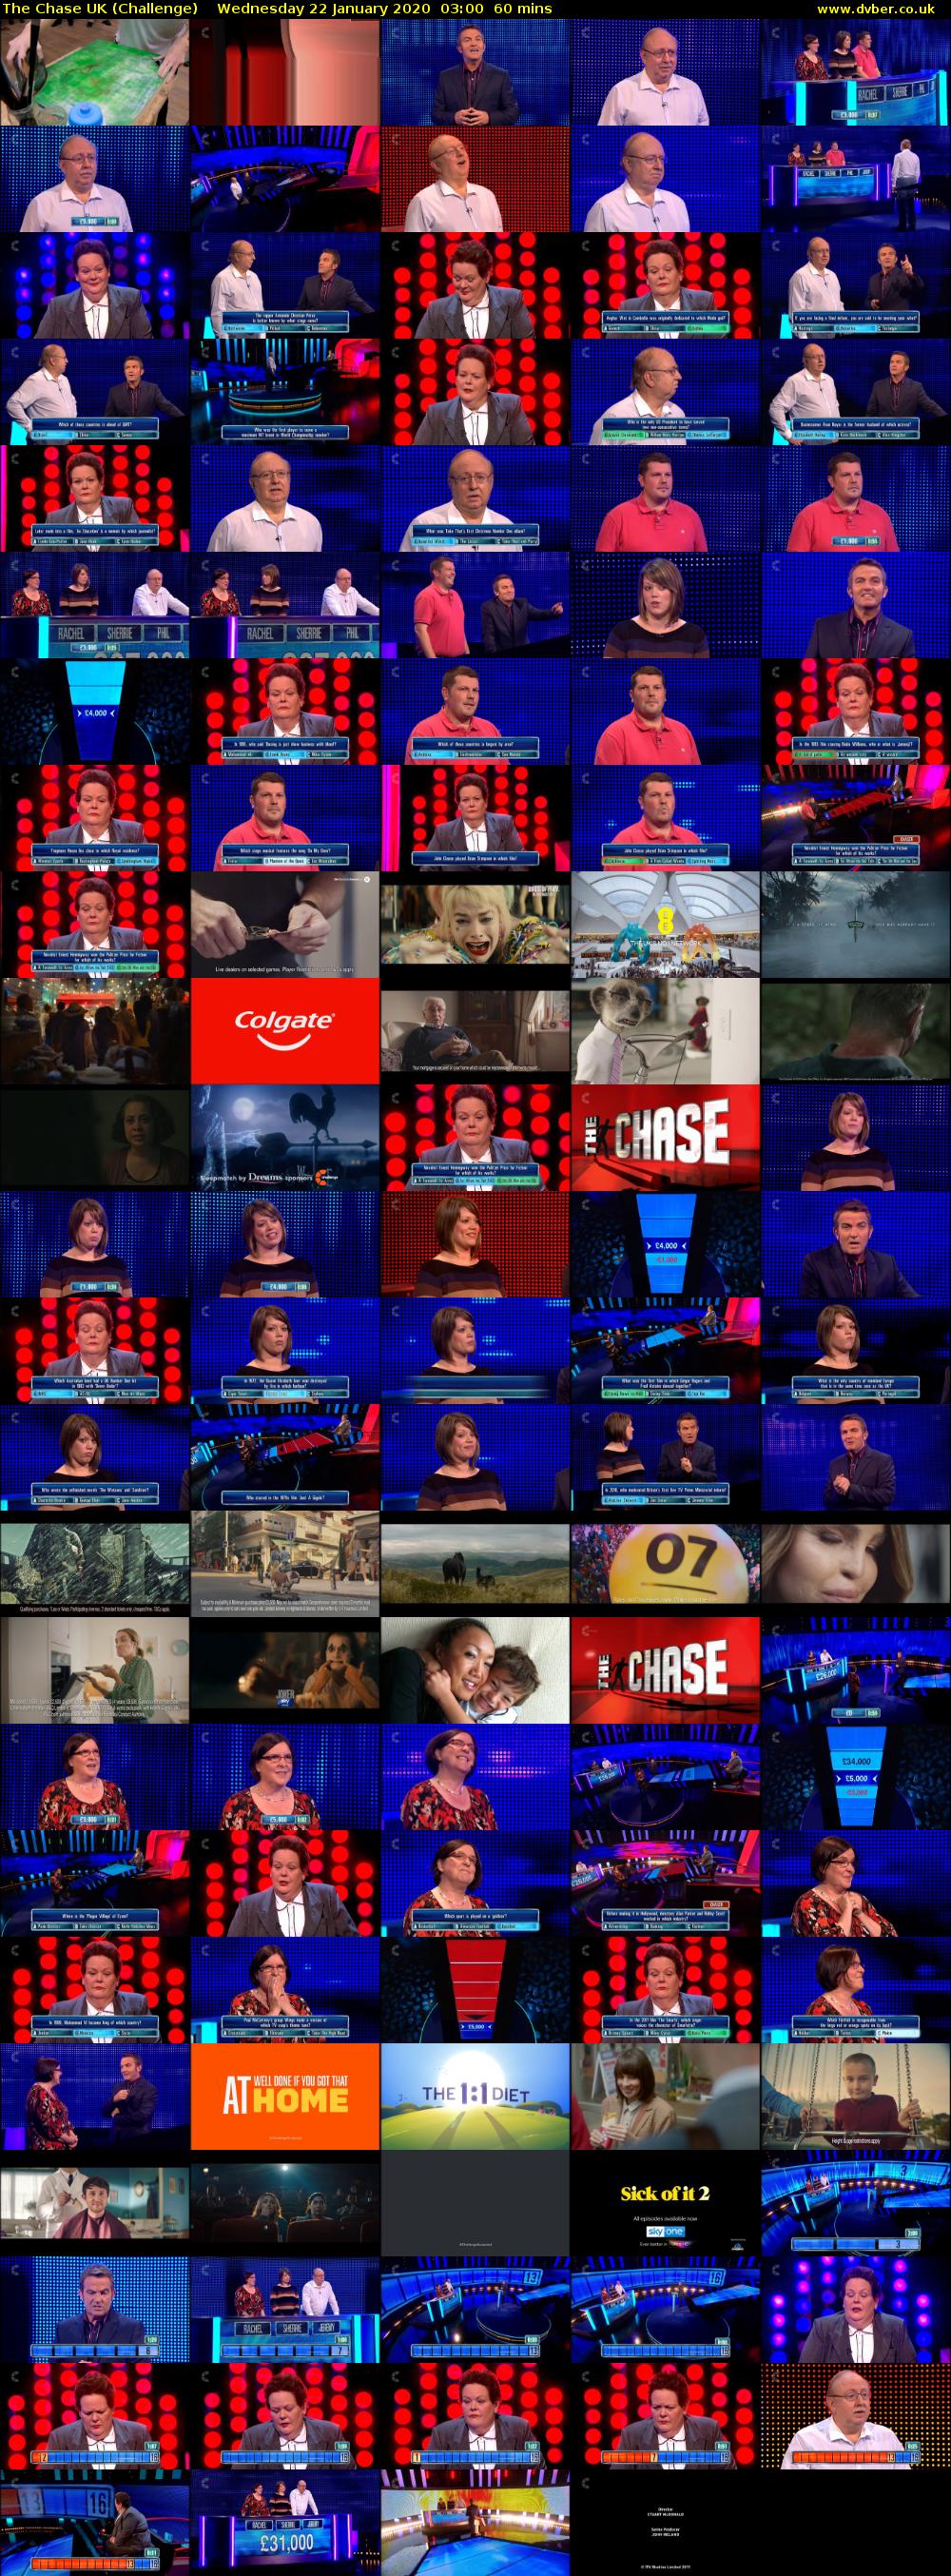 The Chase UK (Challenge) Wednesday 22 January 2020 03:00 - 04:00